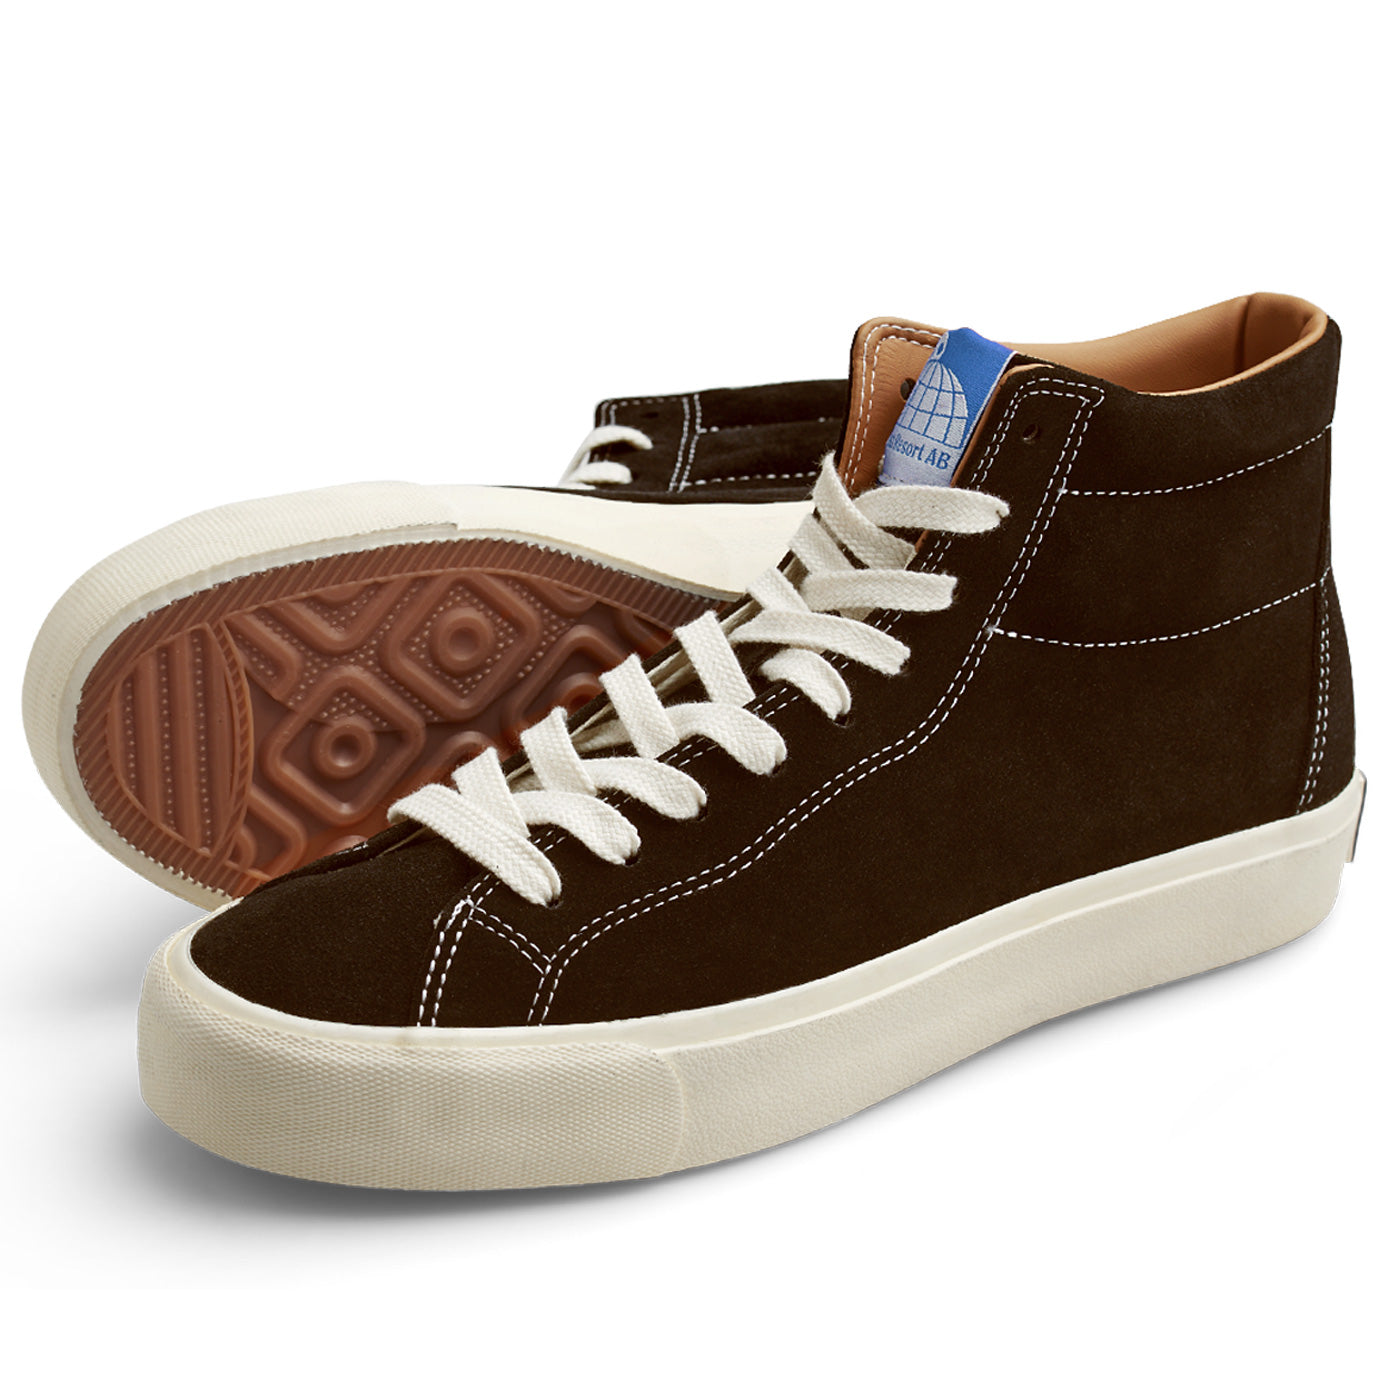 Last Resort AB VM003 Suede Hi Shoes - Chocolate Brown/White